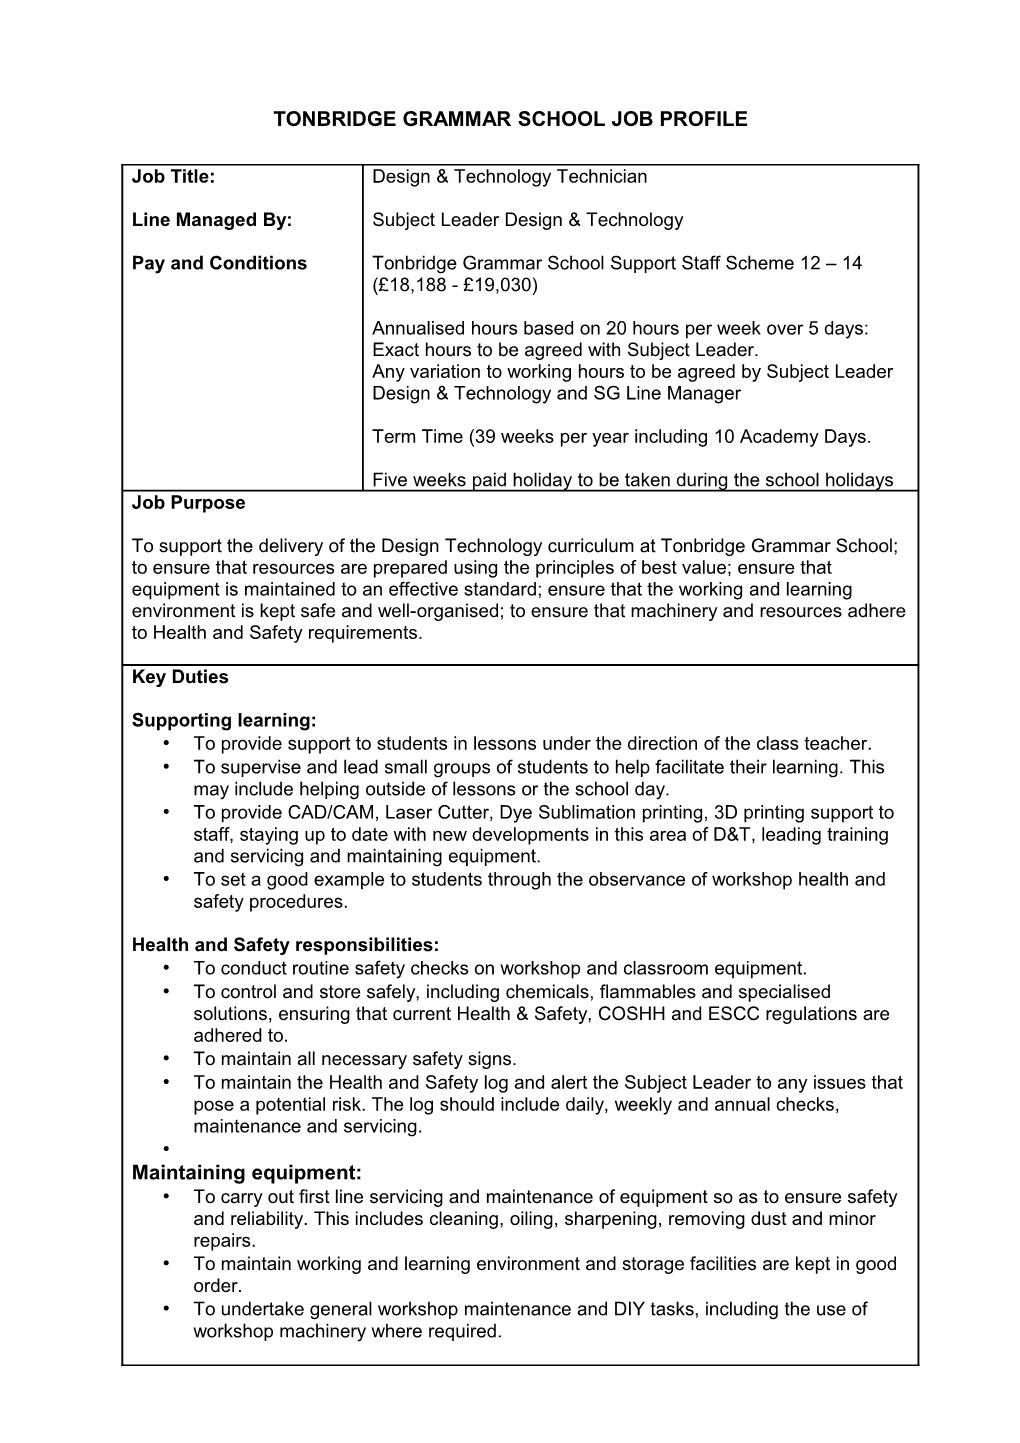 Tonbridge Grammar School Job Profile